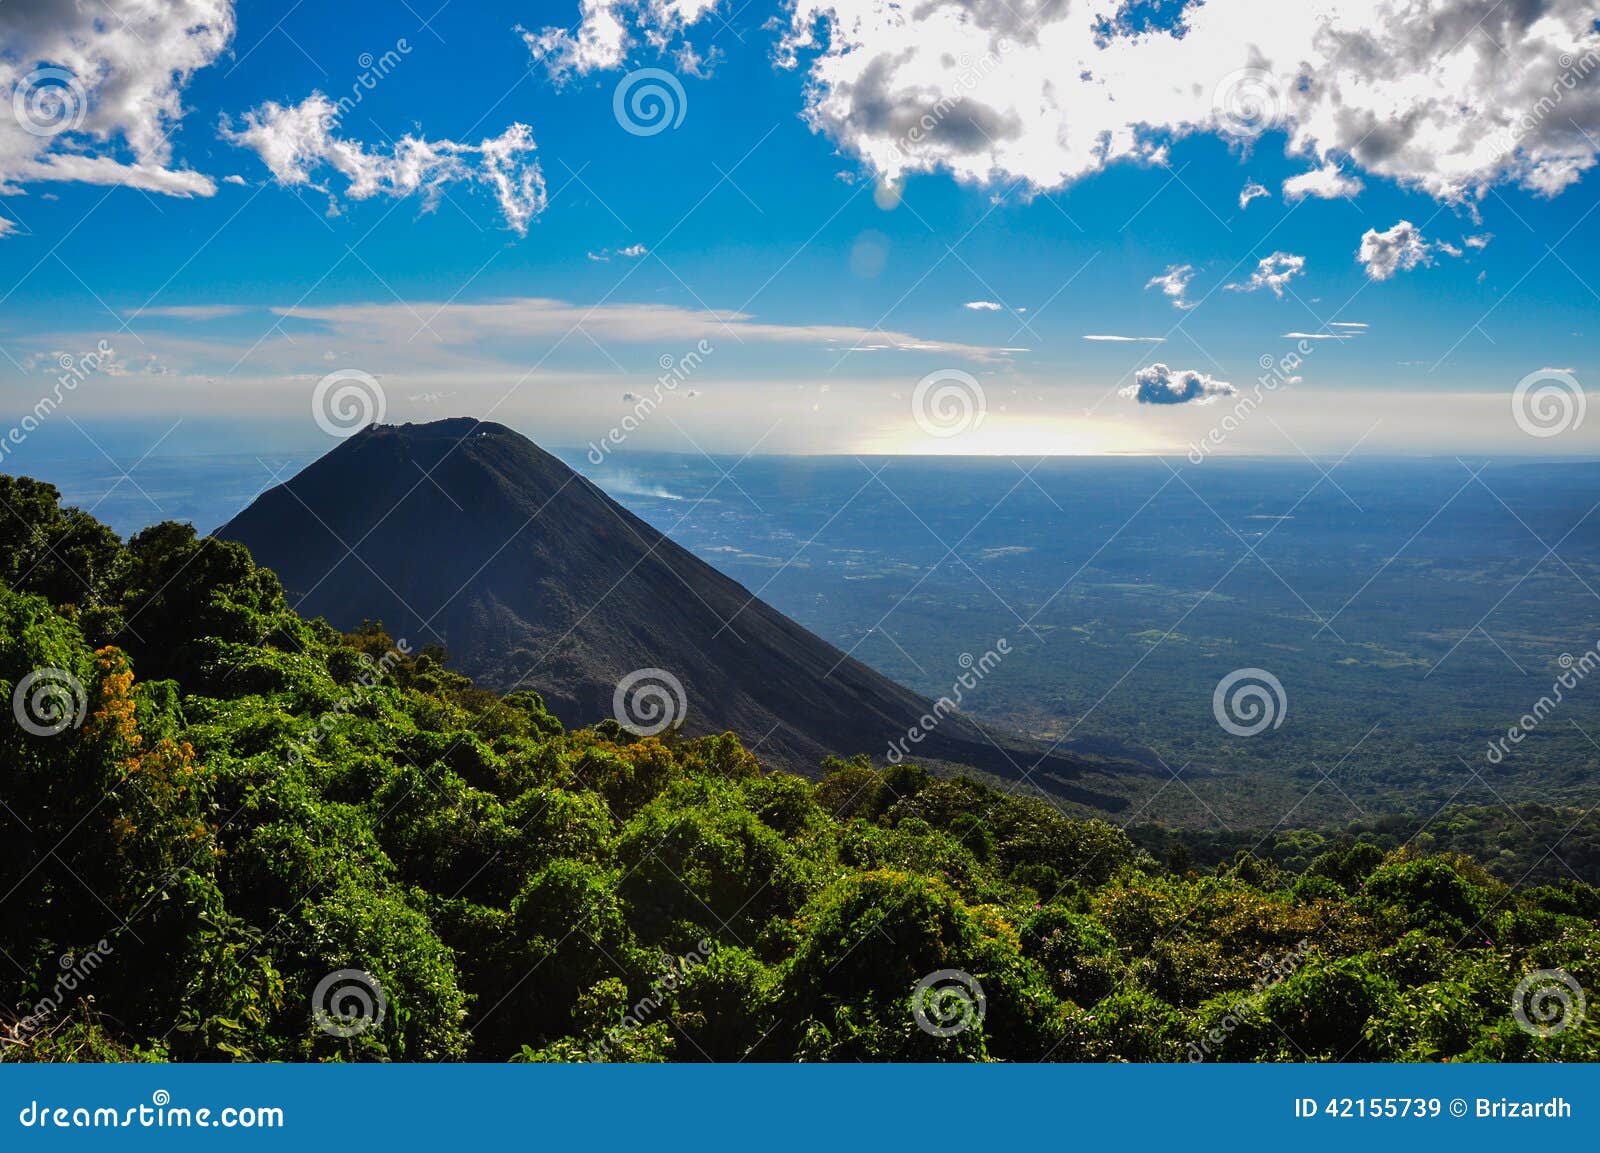 izalco volcano from cerro verde national park, el salvador